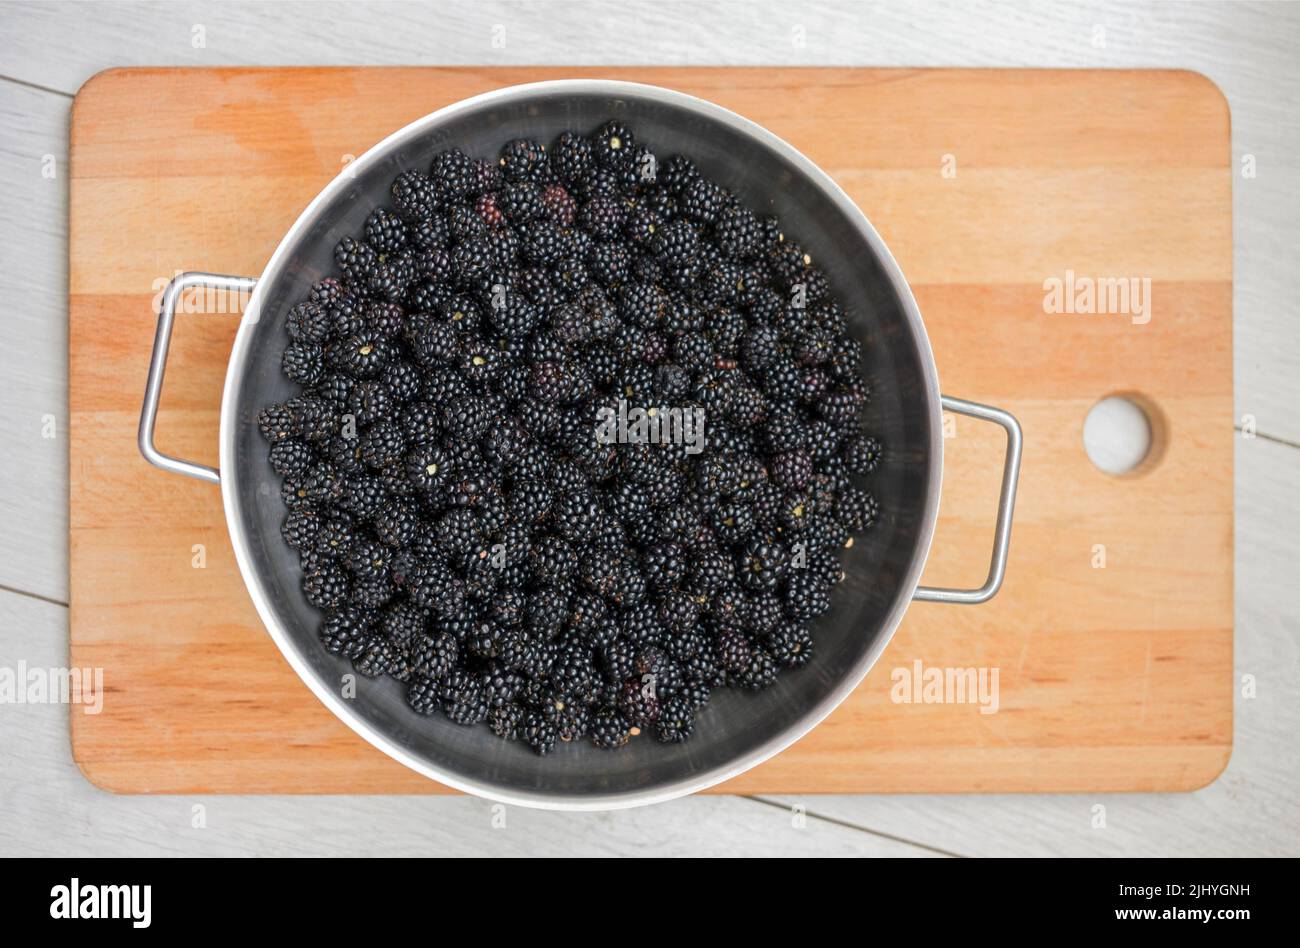 Harvest of wild blackberries in summer to make jams. Montpellier, Occitanie, France Stock Photo